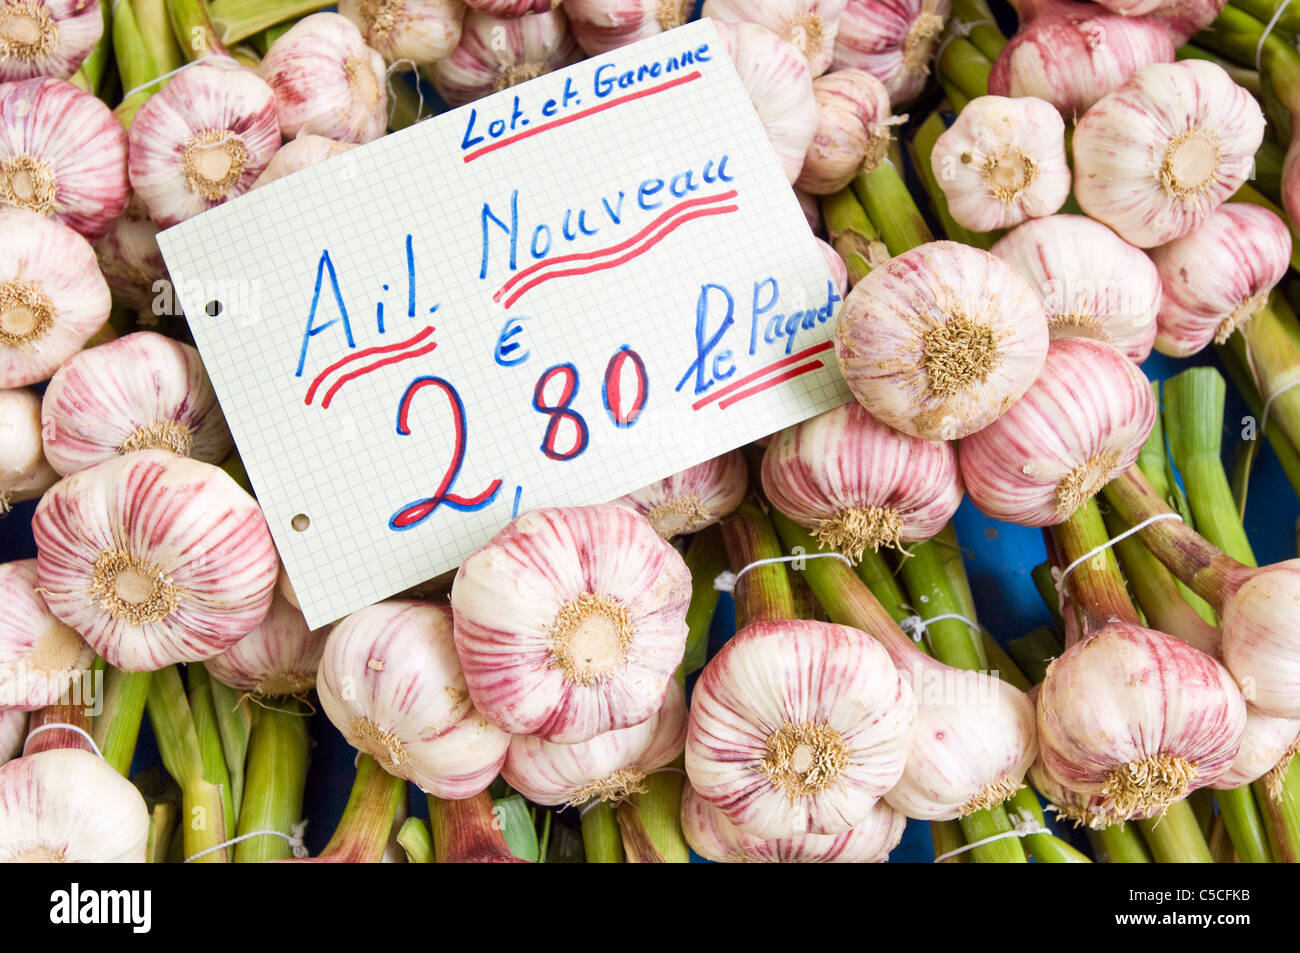 Market produce at the Saturday market in Sarlat-la-Canéda Stock Photo